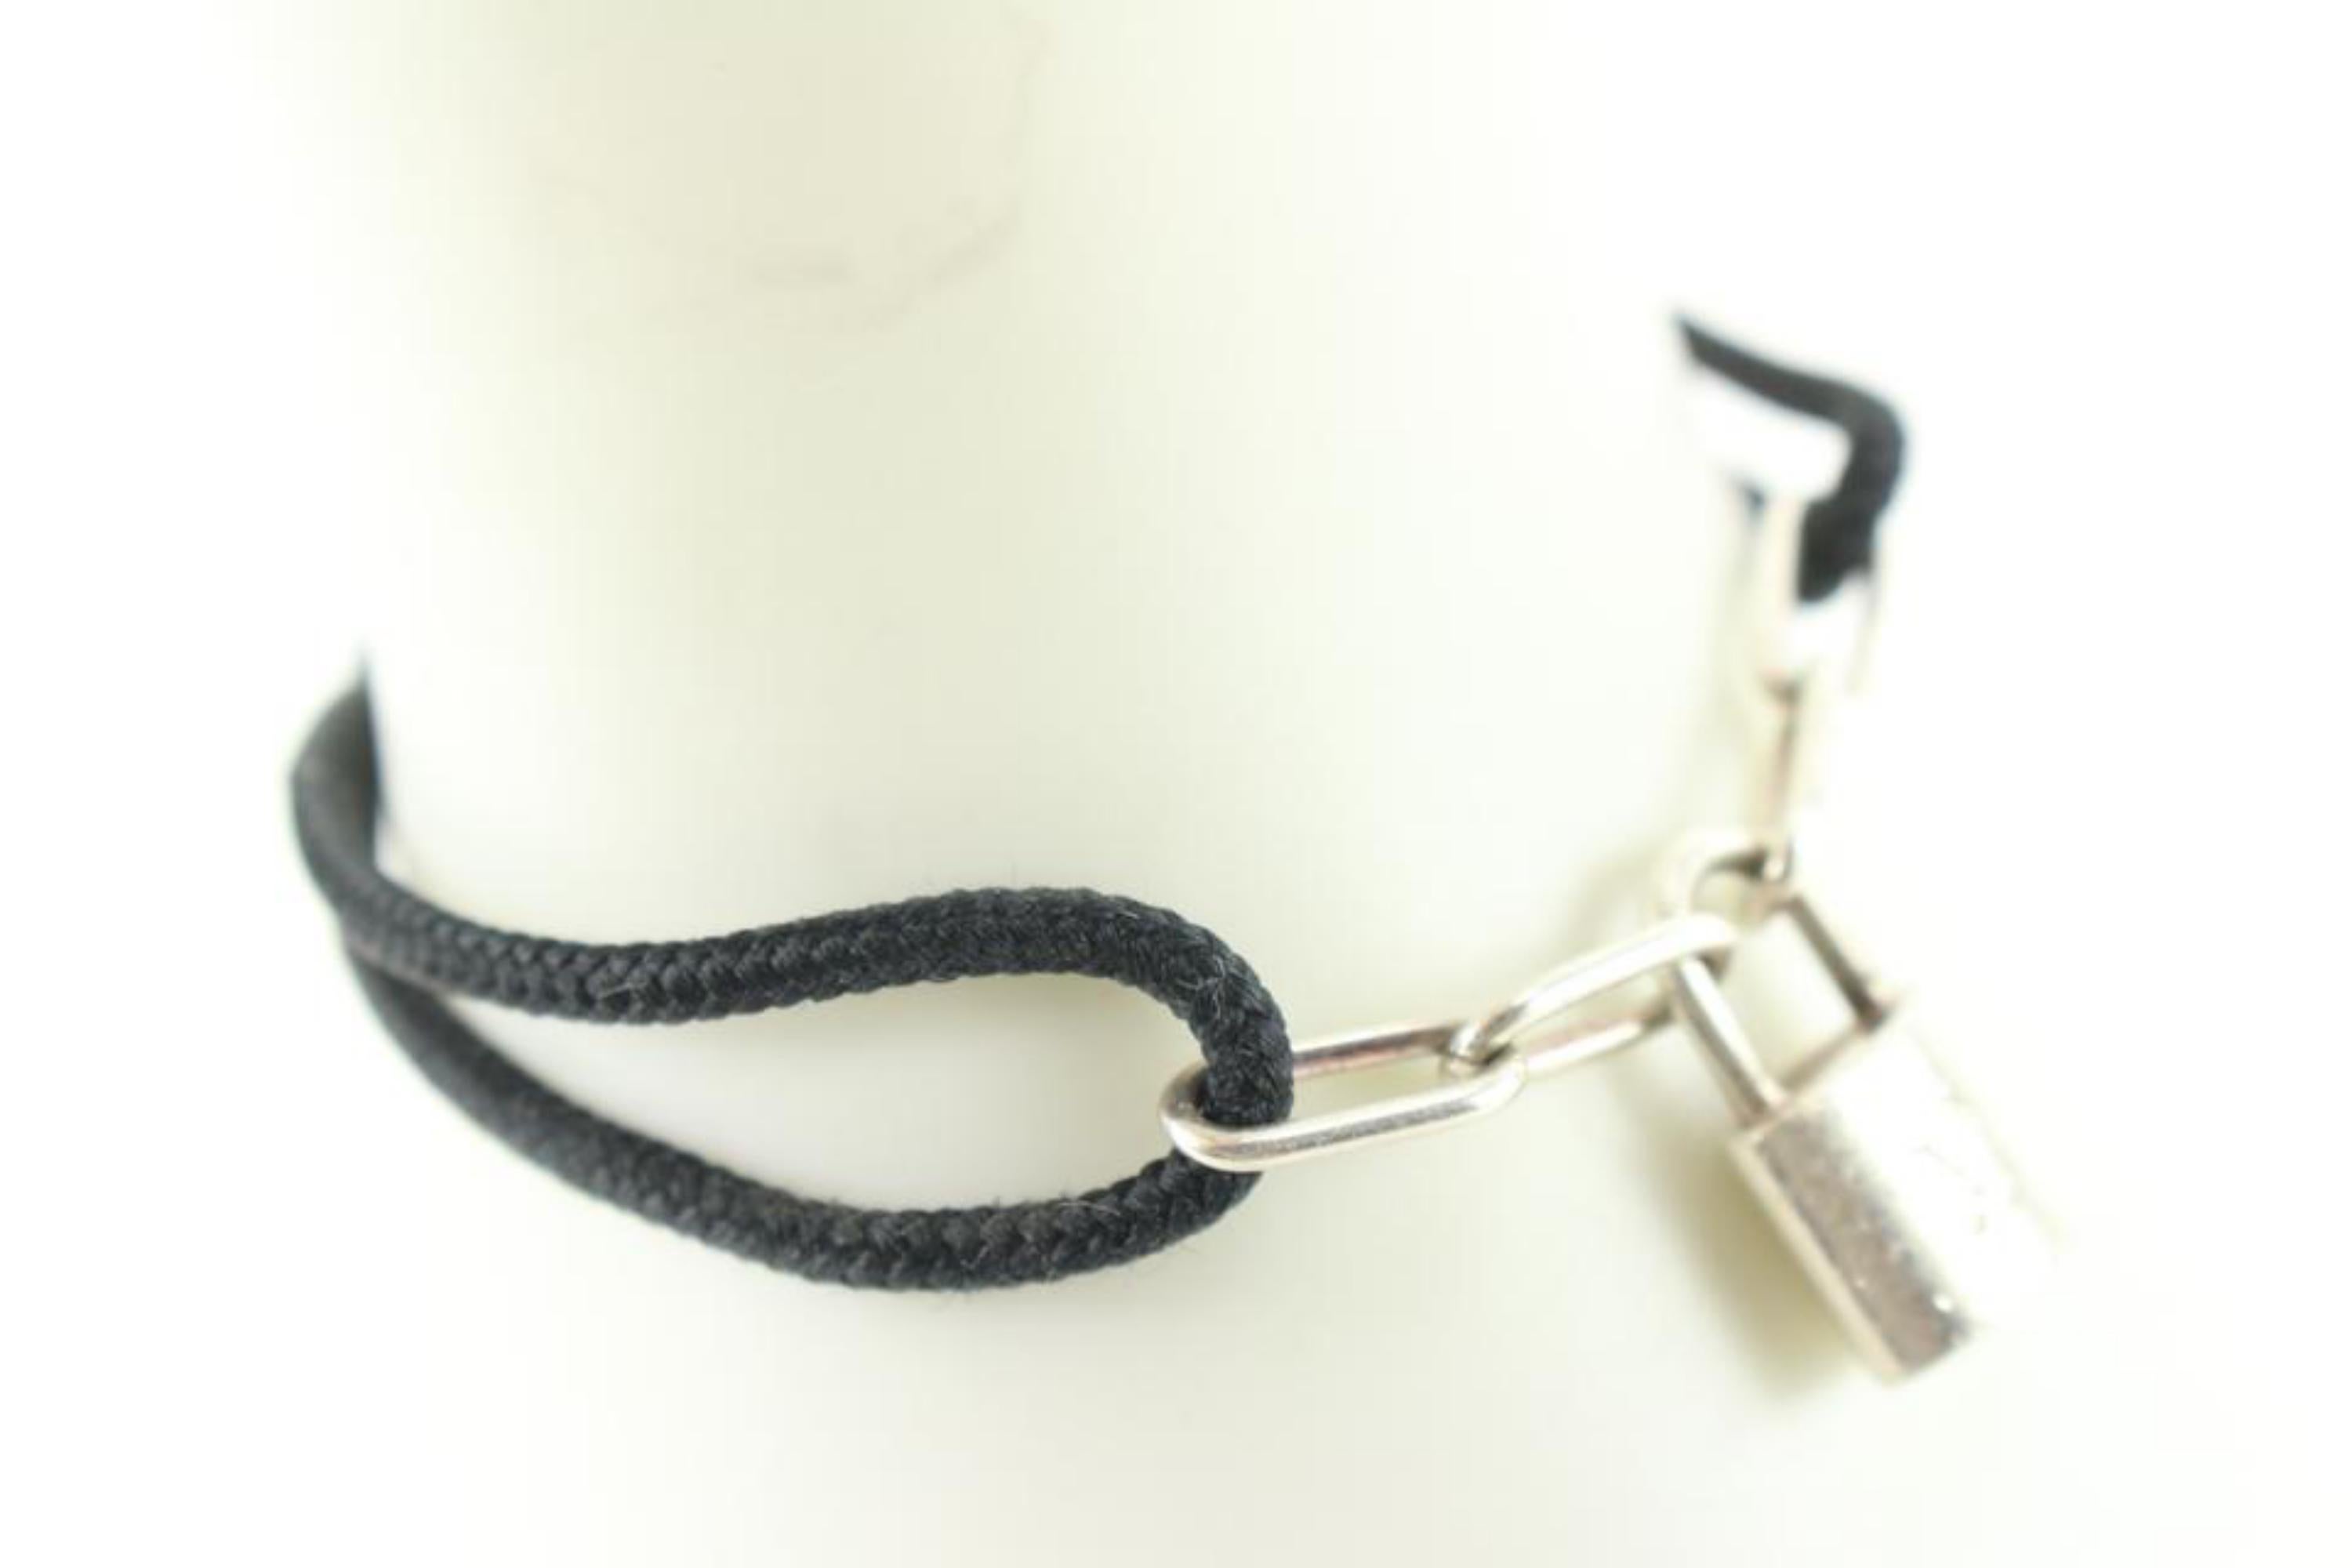 Louis Vuitton x UNICEF: Silver Lockit bracelet by Virgil Abloh - HIGHXTAR.